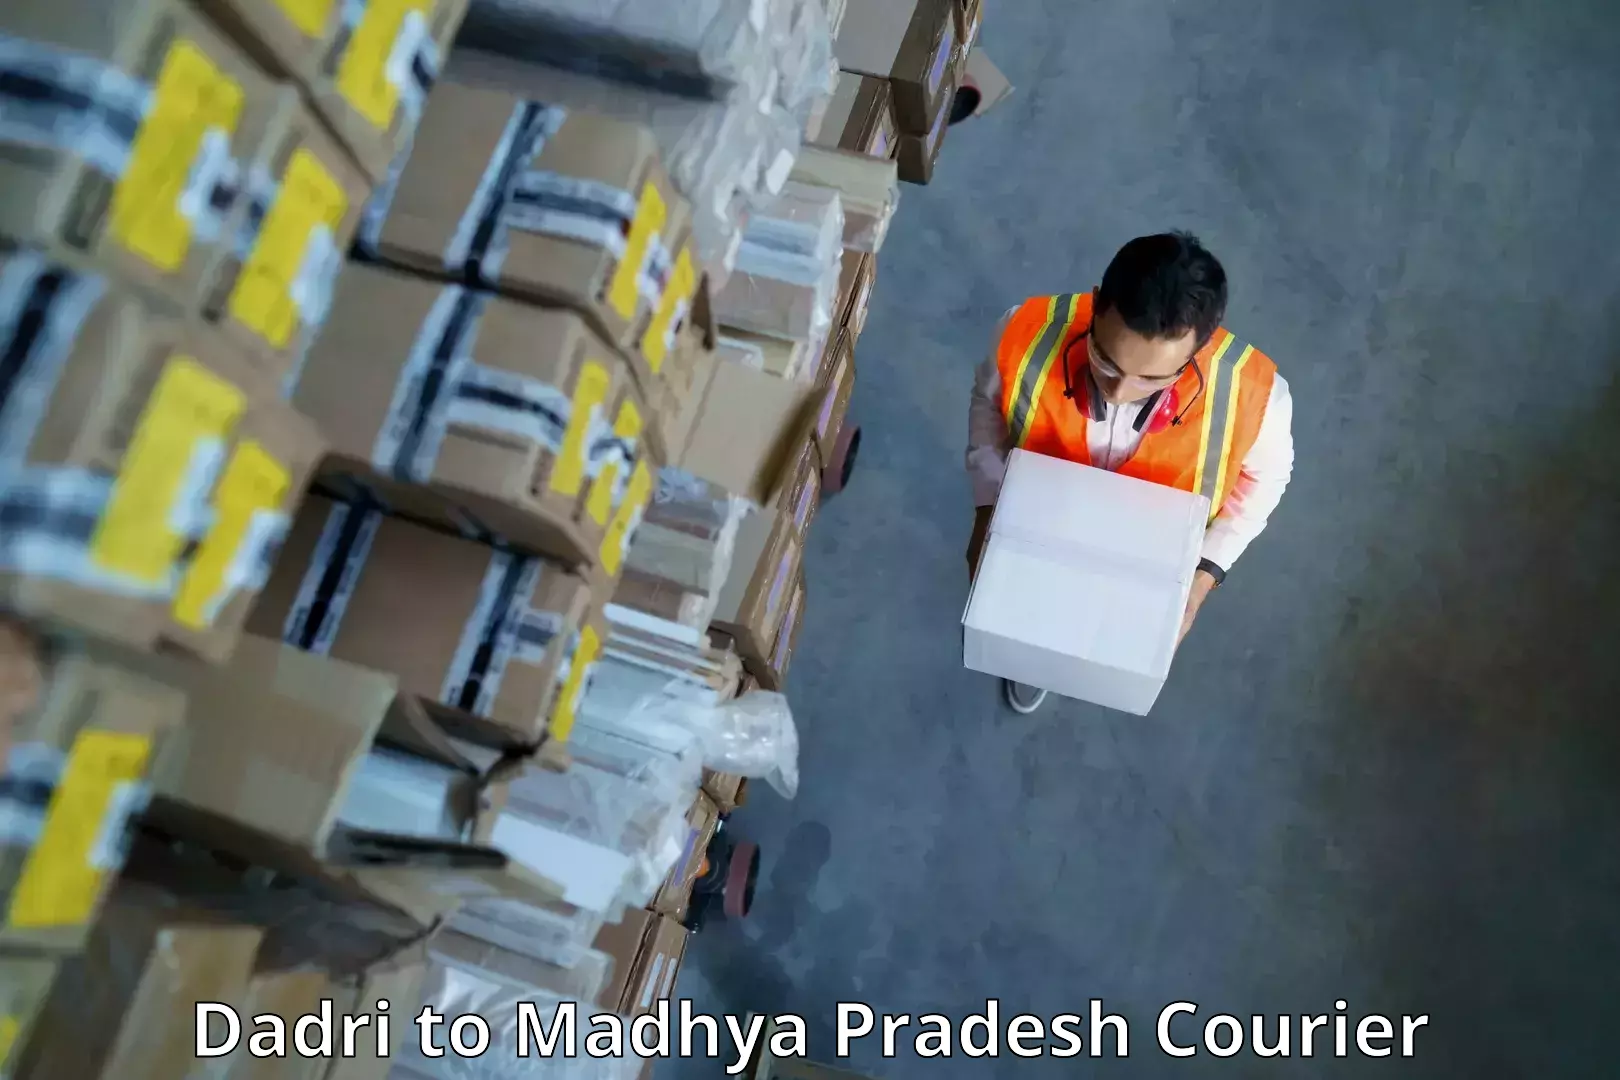 Reliable delivery network Dadri to Madhya Pradesh